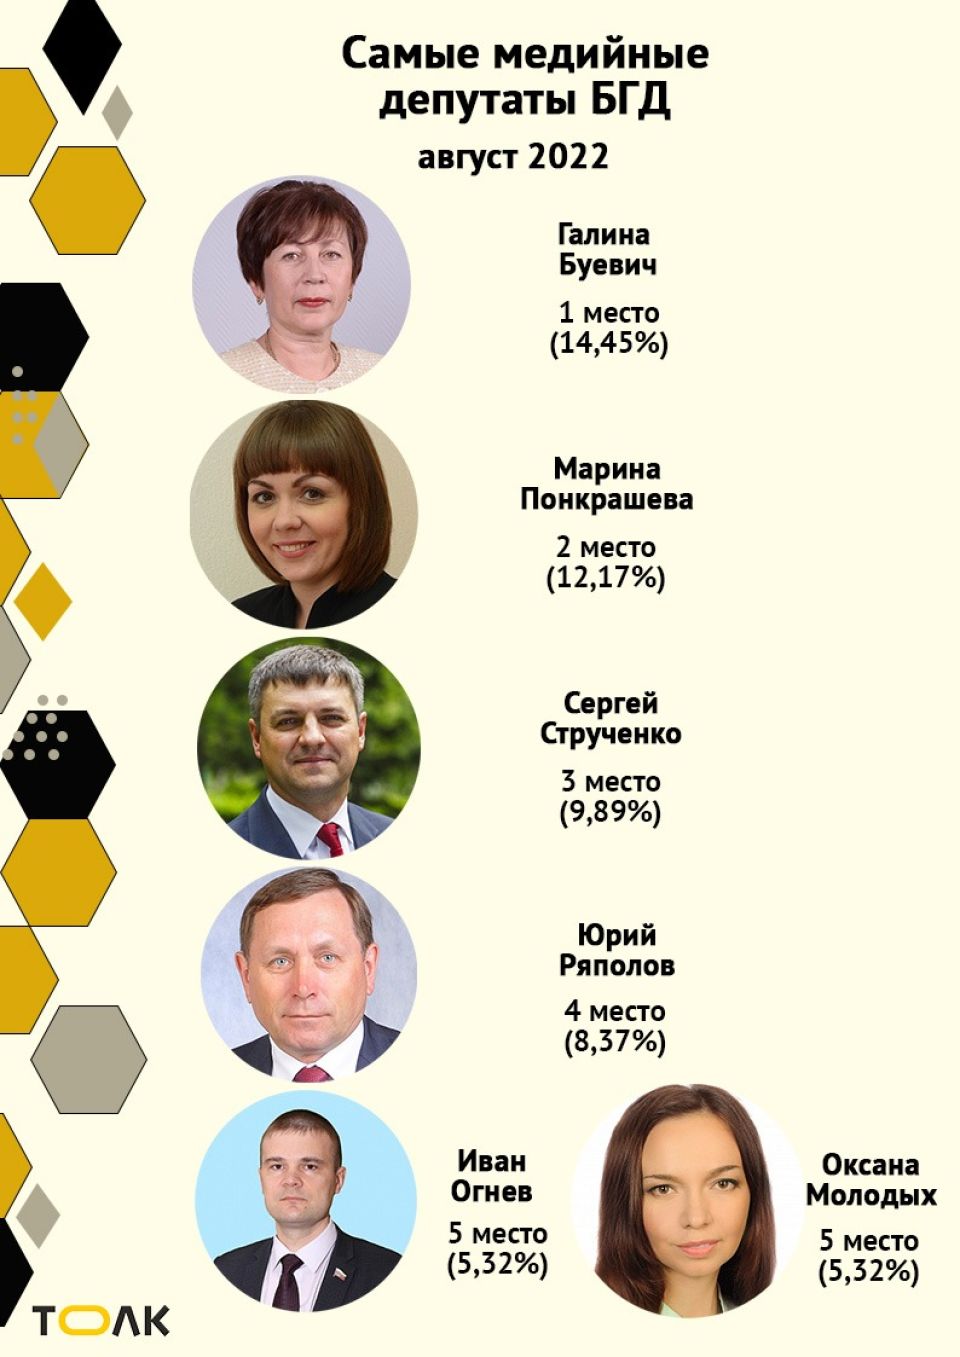 Рейтинг медийности депутатов БГД, август 2022 года